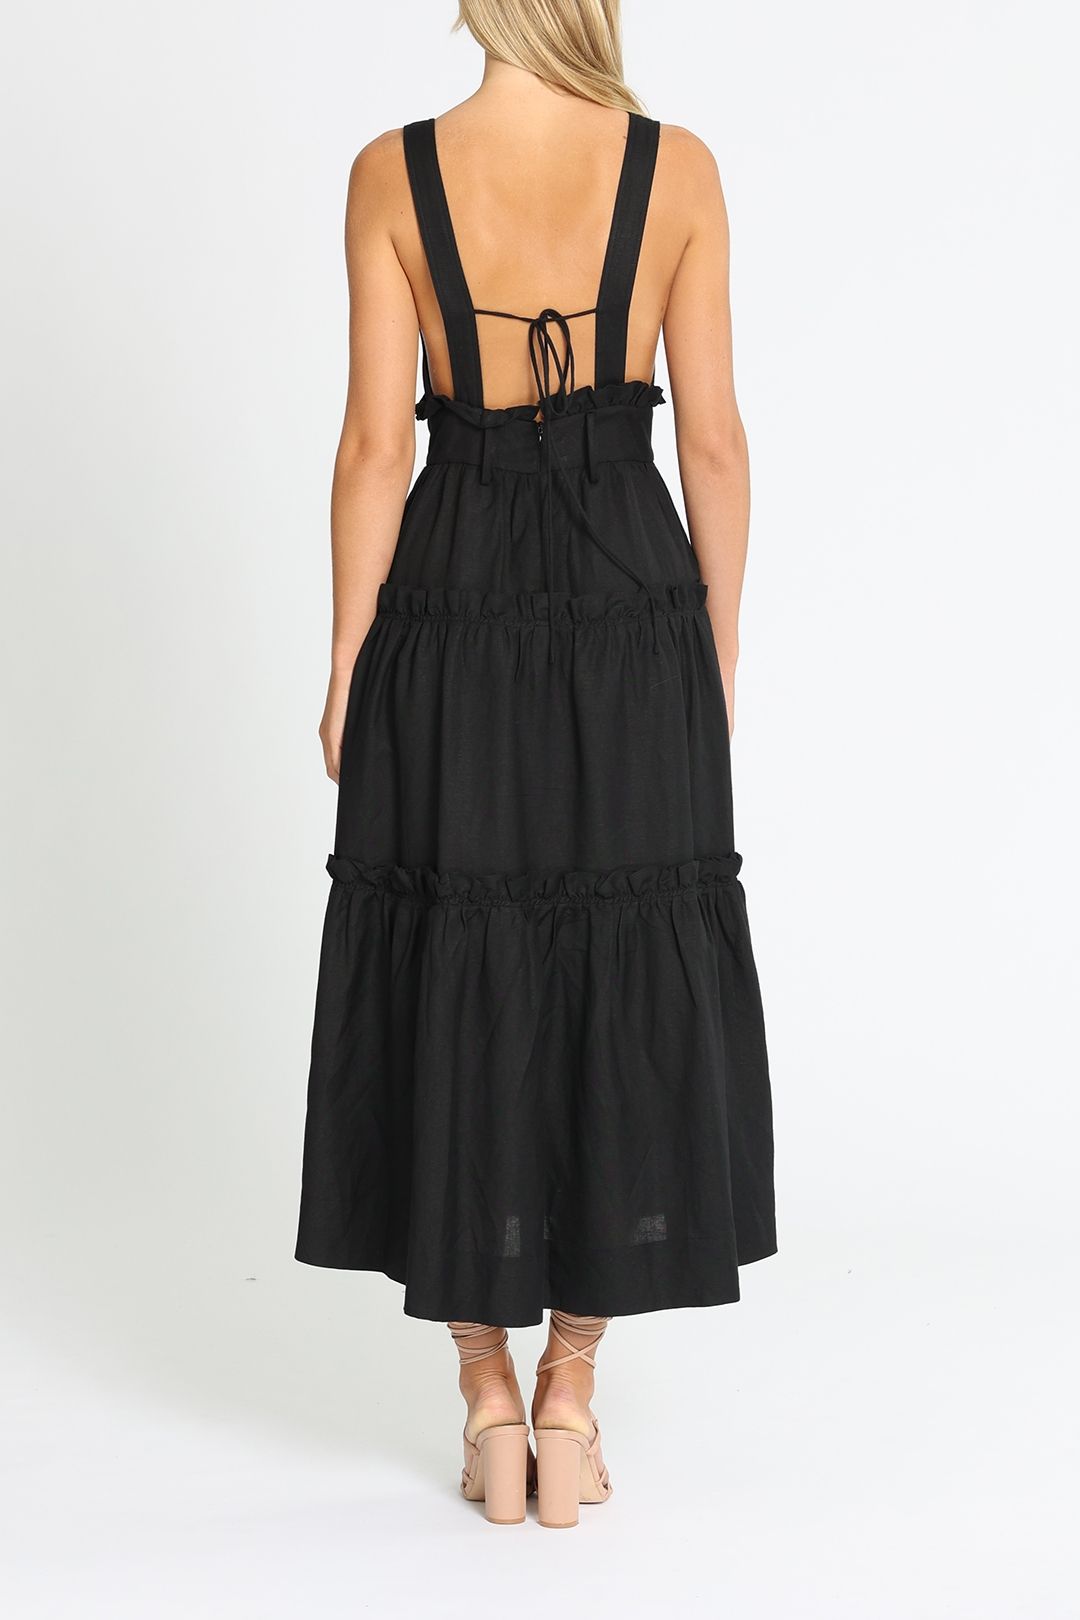 Shona Joy Tiered Midi Dress Black Flared Skirt